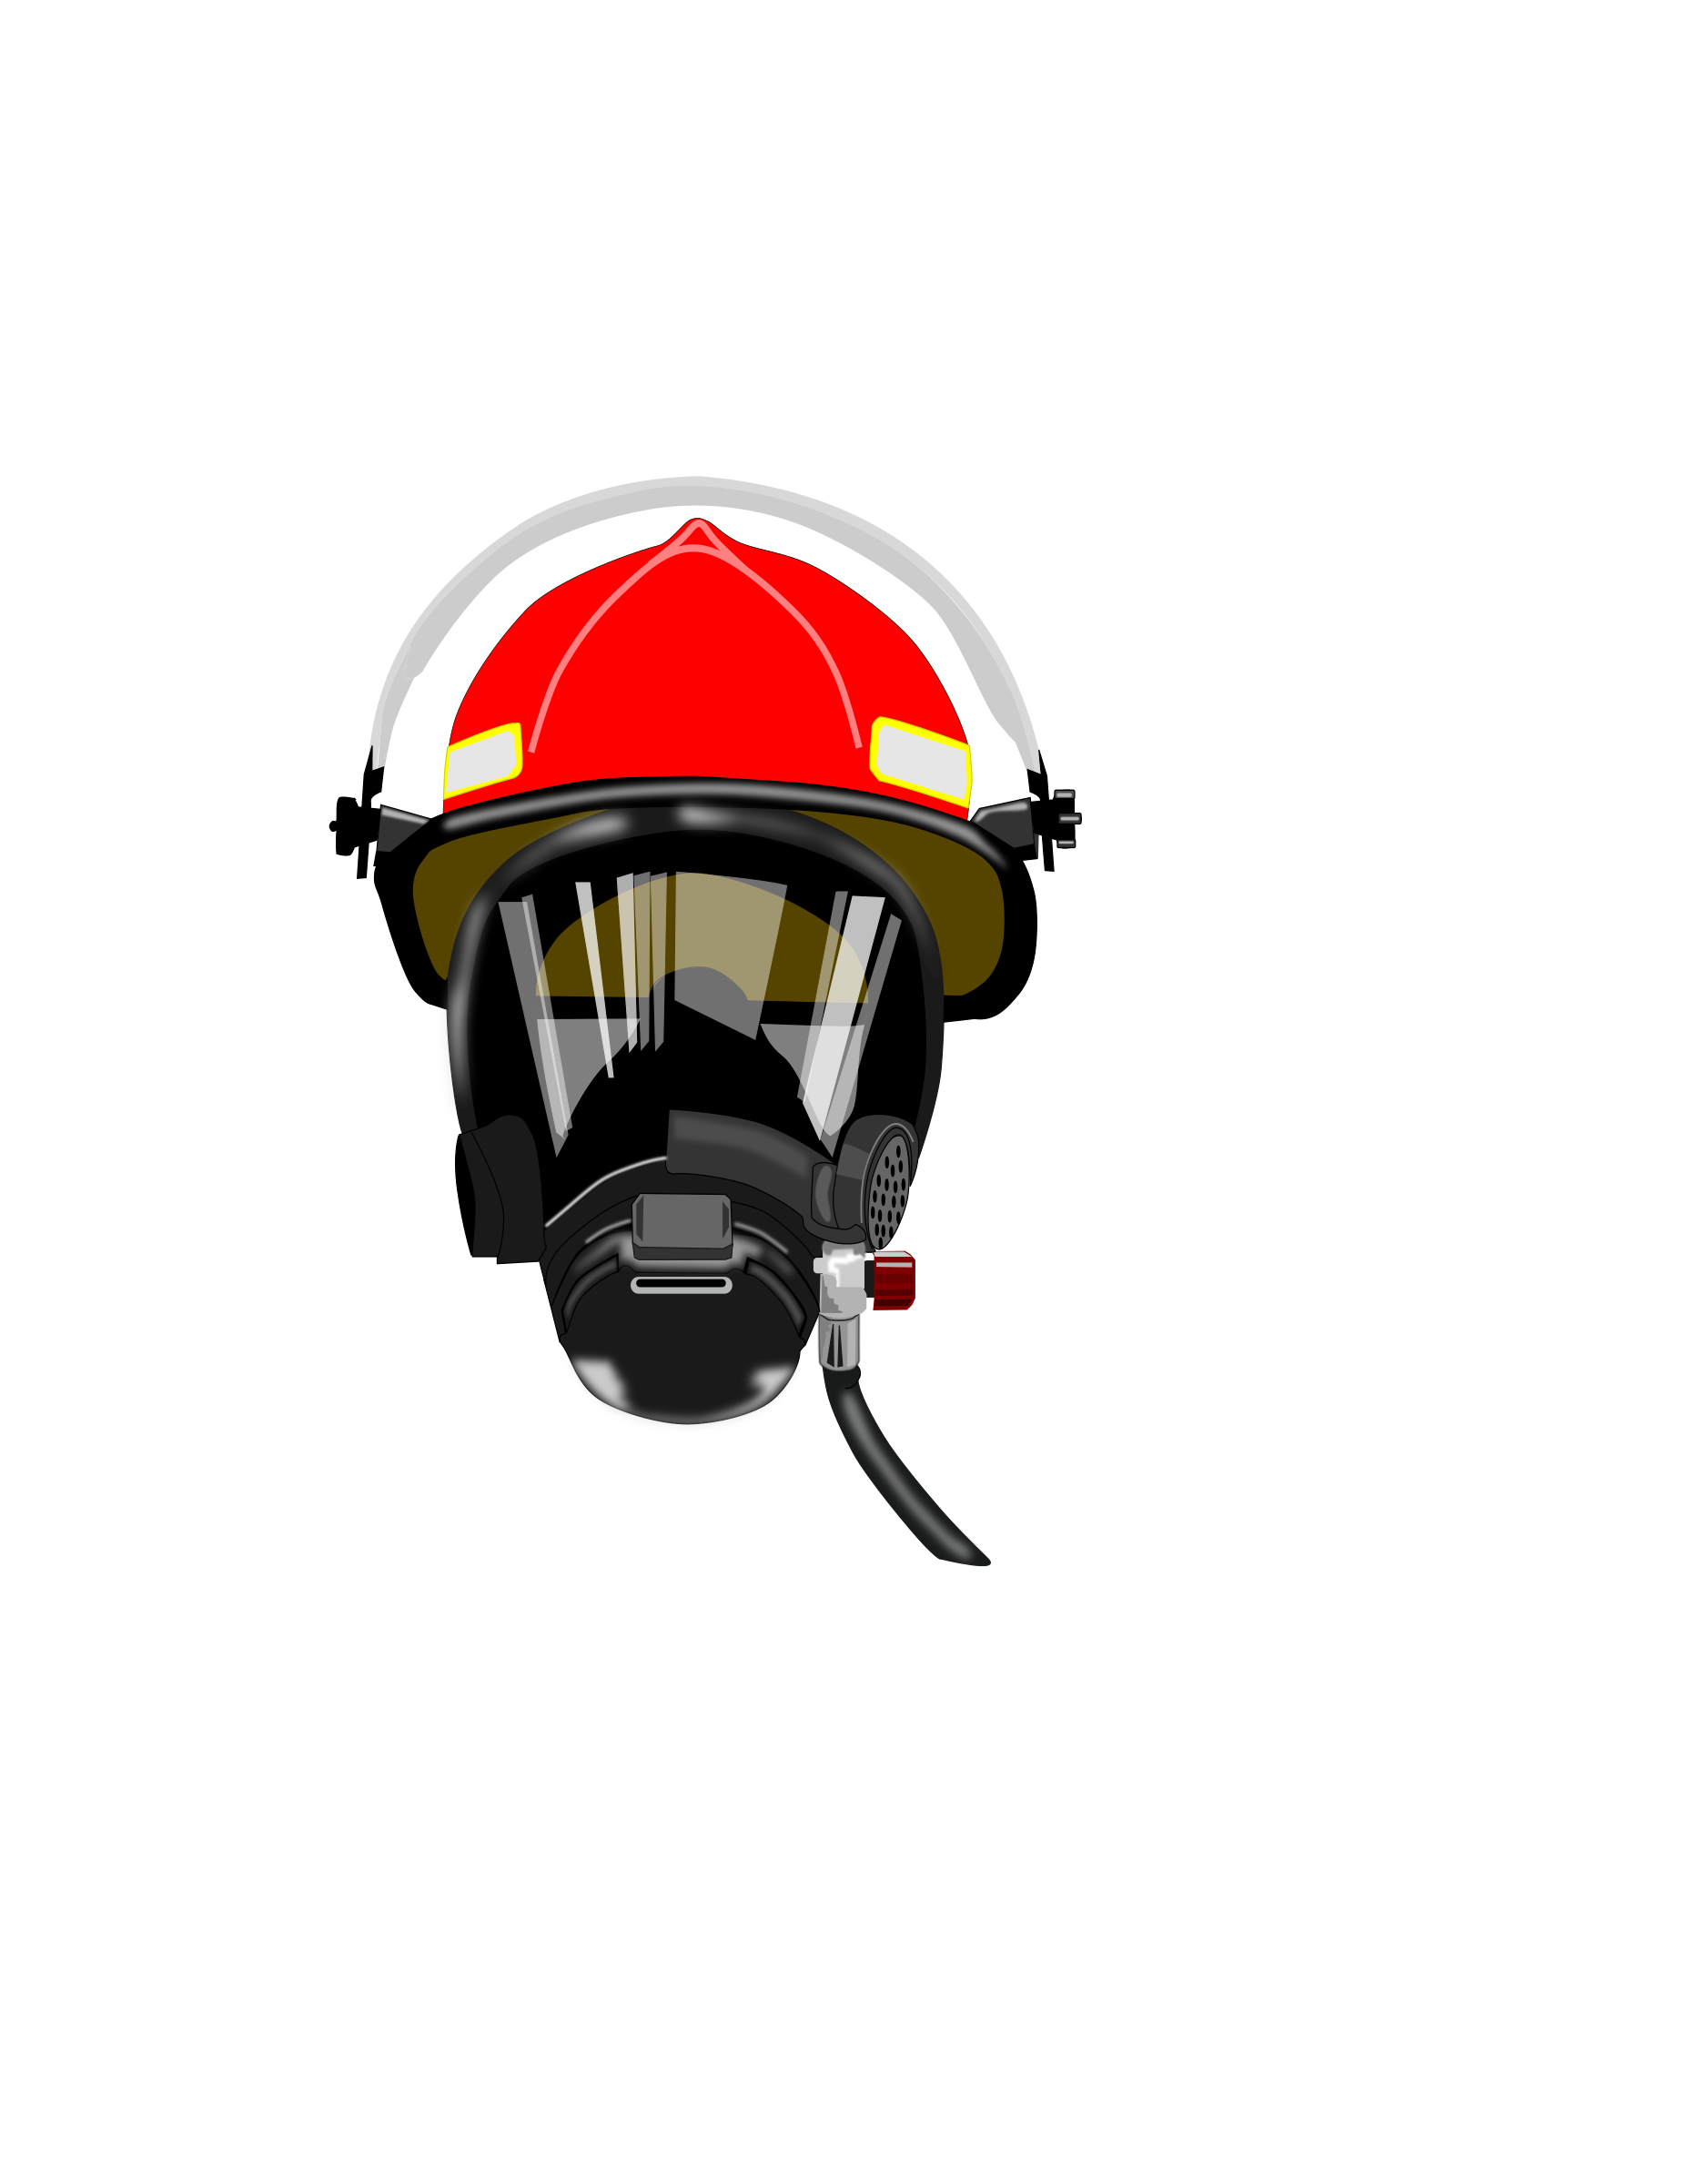 Fire Helmet Mask By Dashell